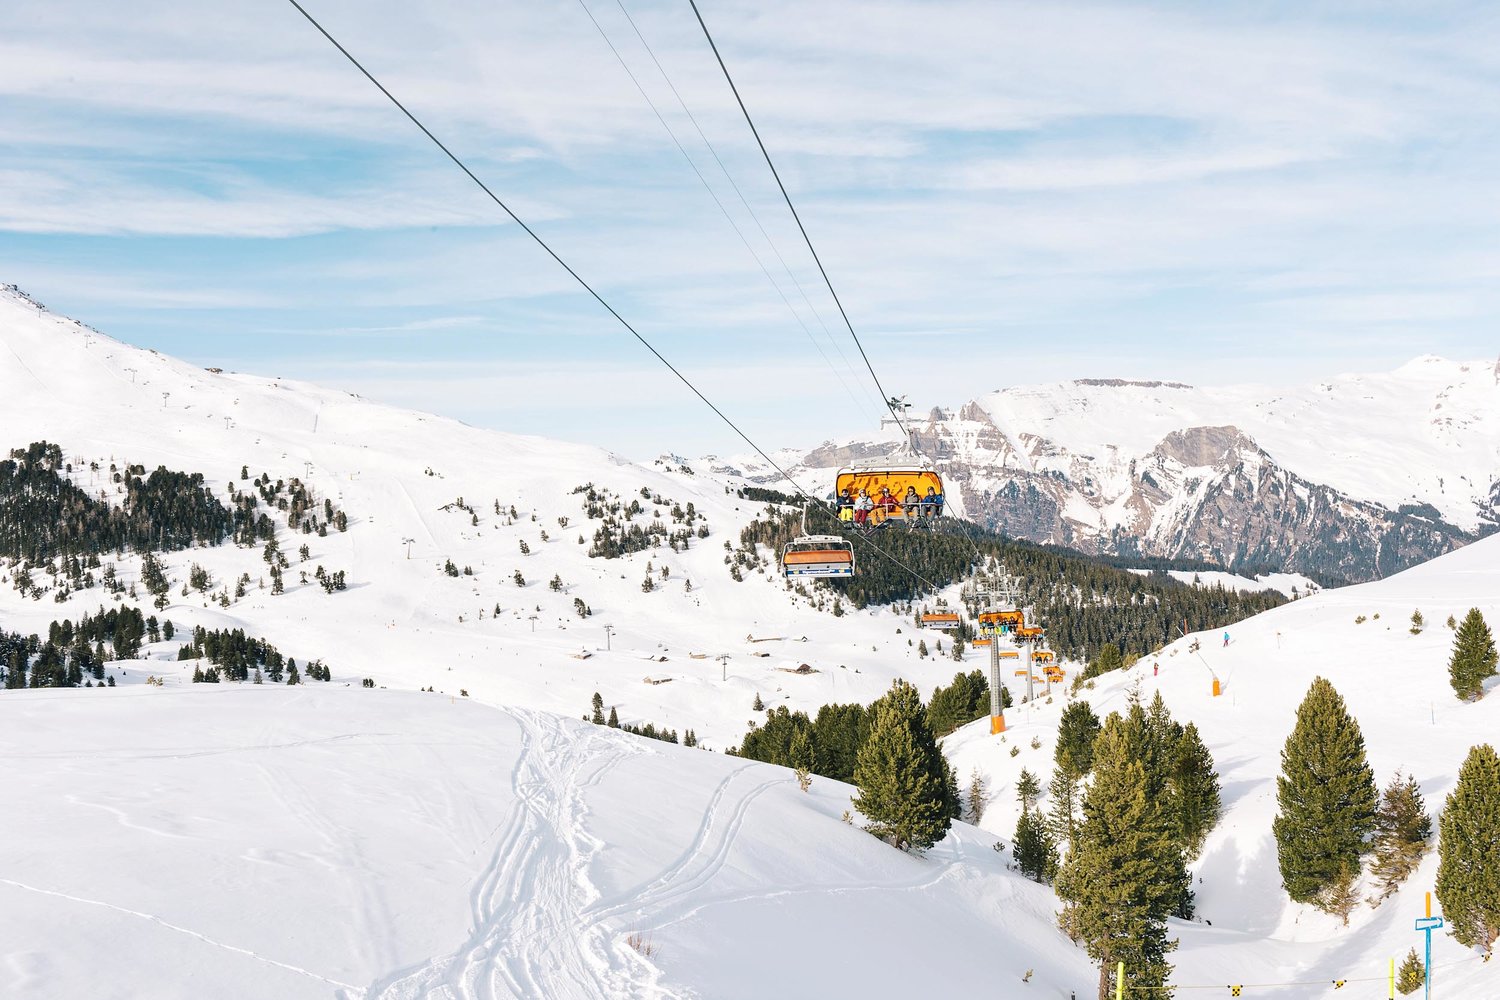 Views heading to Grindelwald via sled